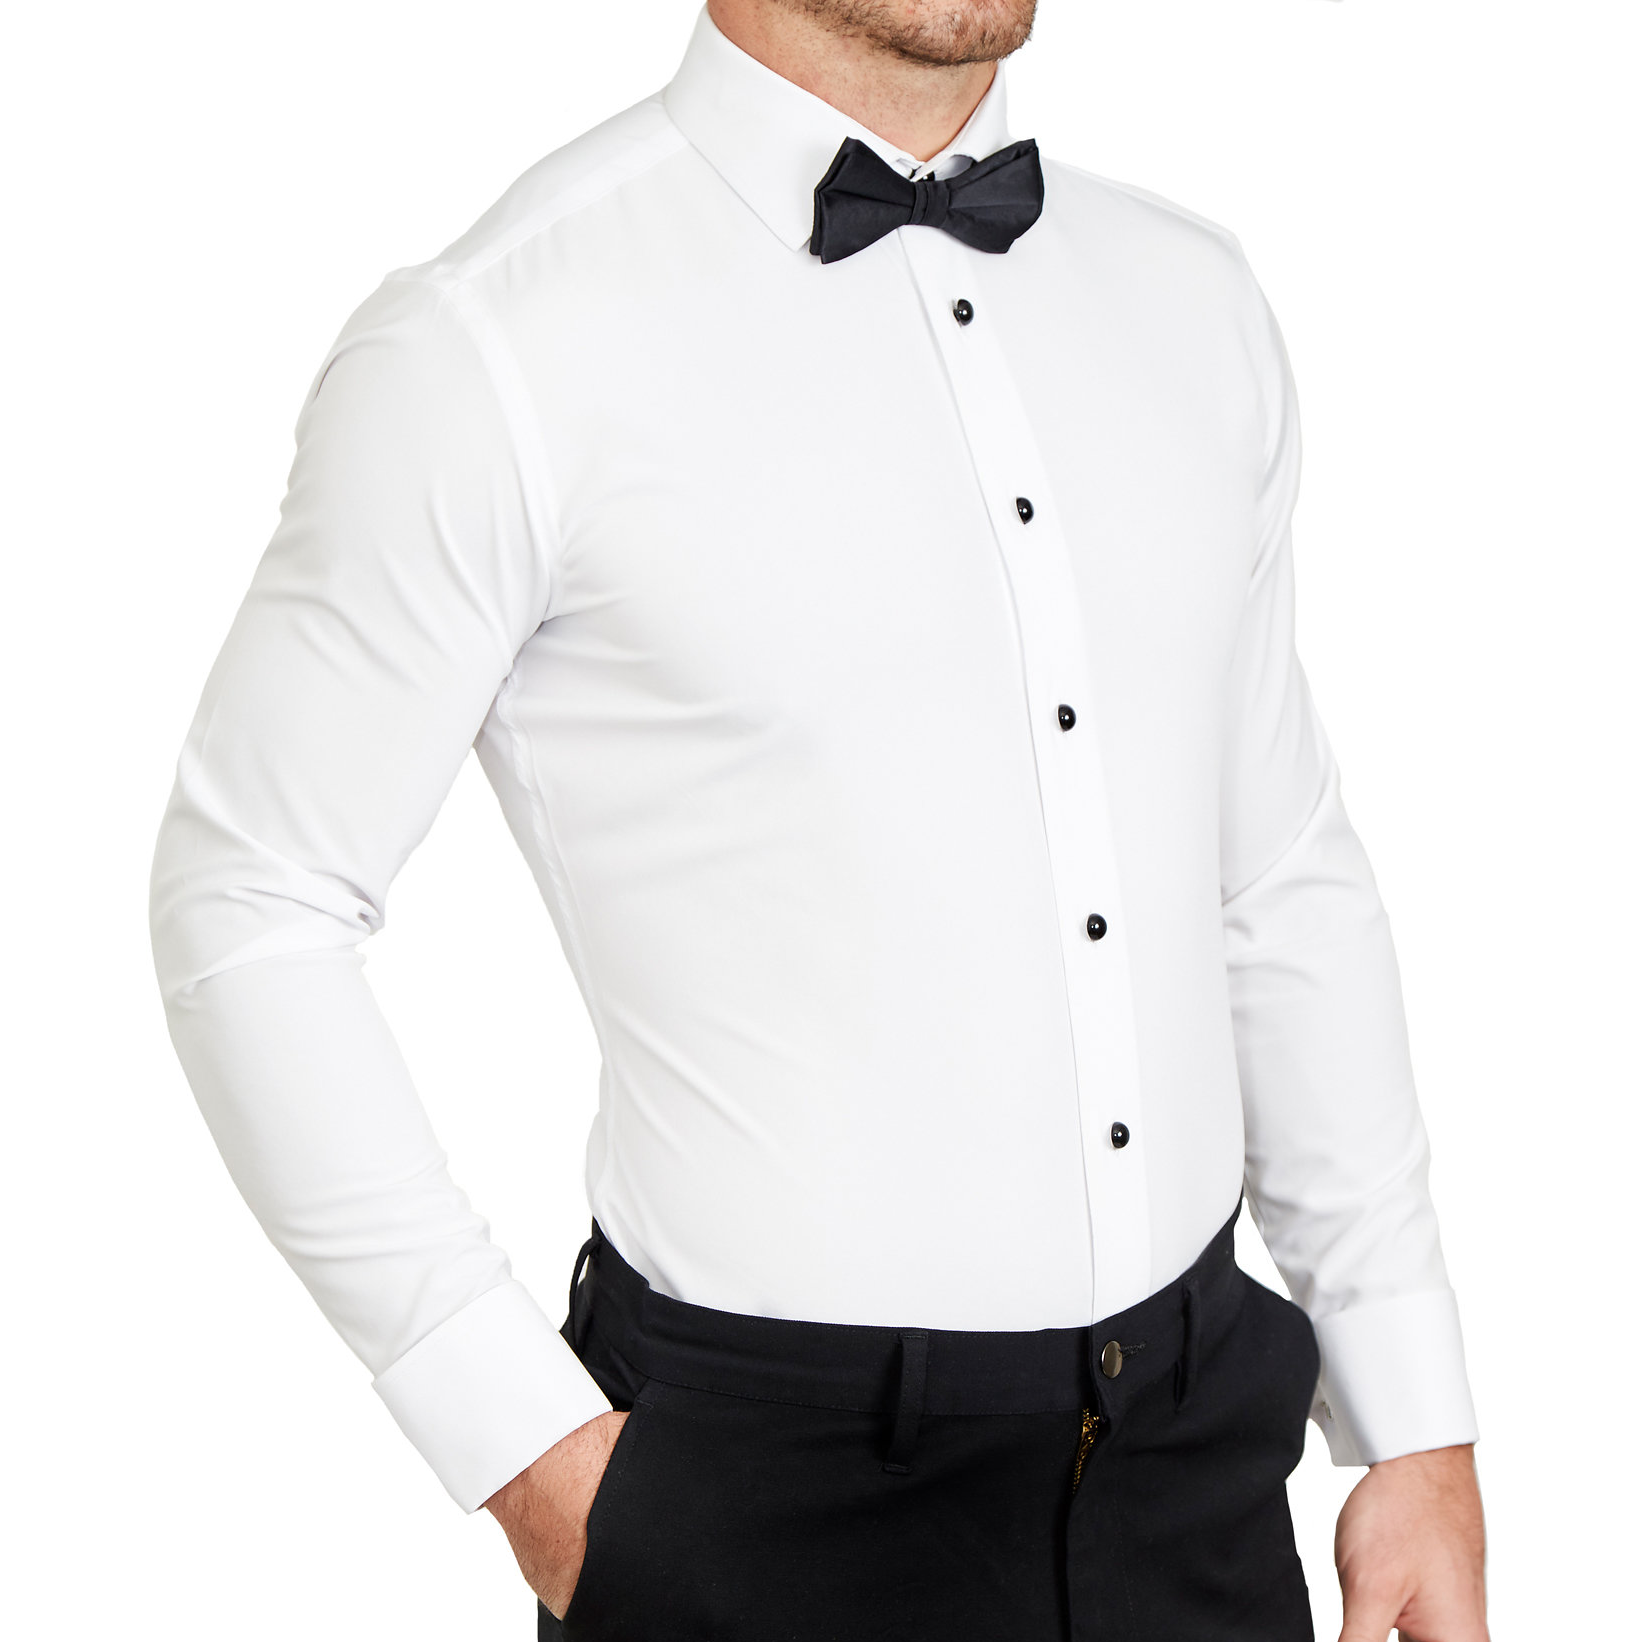 white tuxedo dress shirt